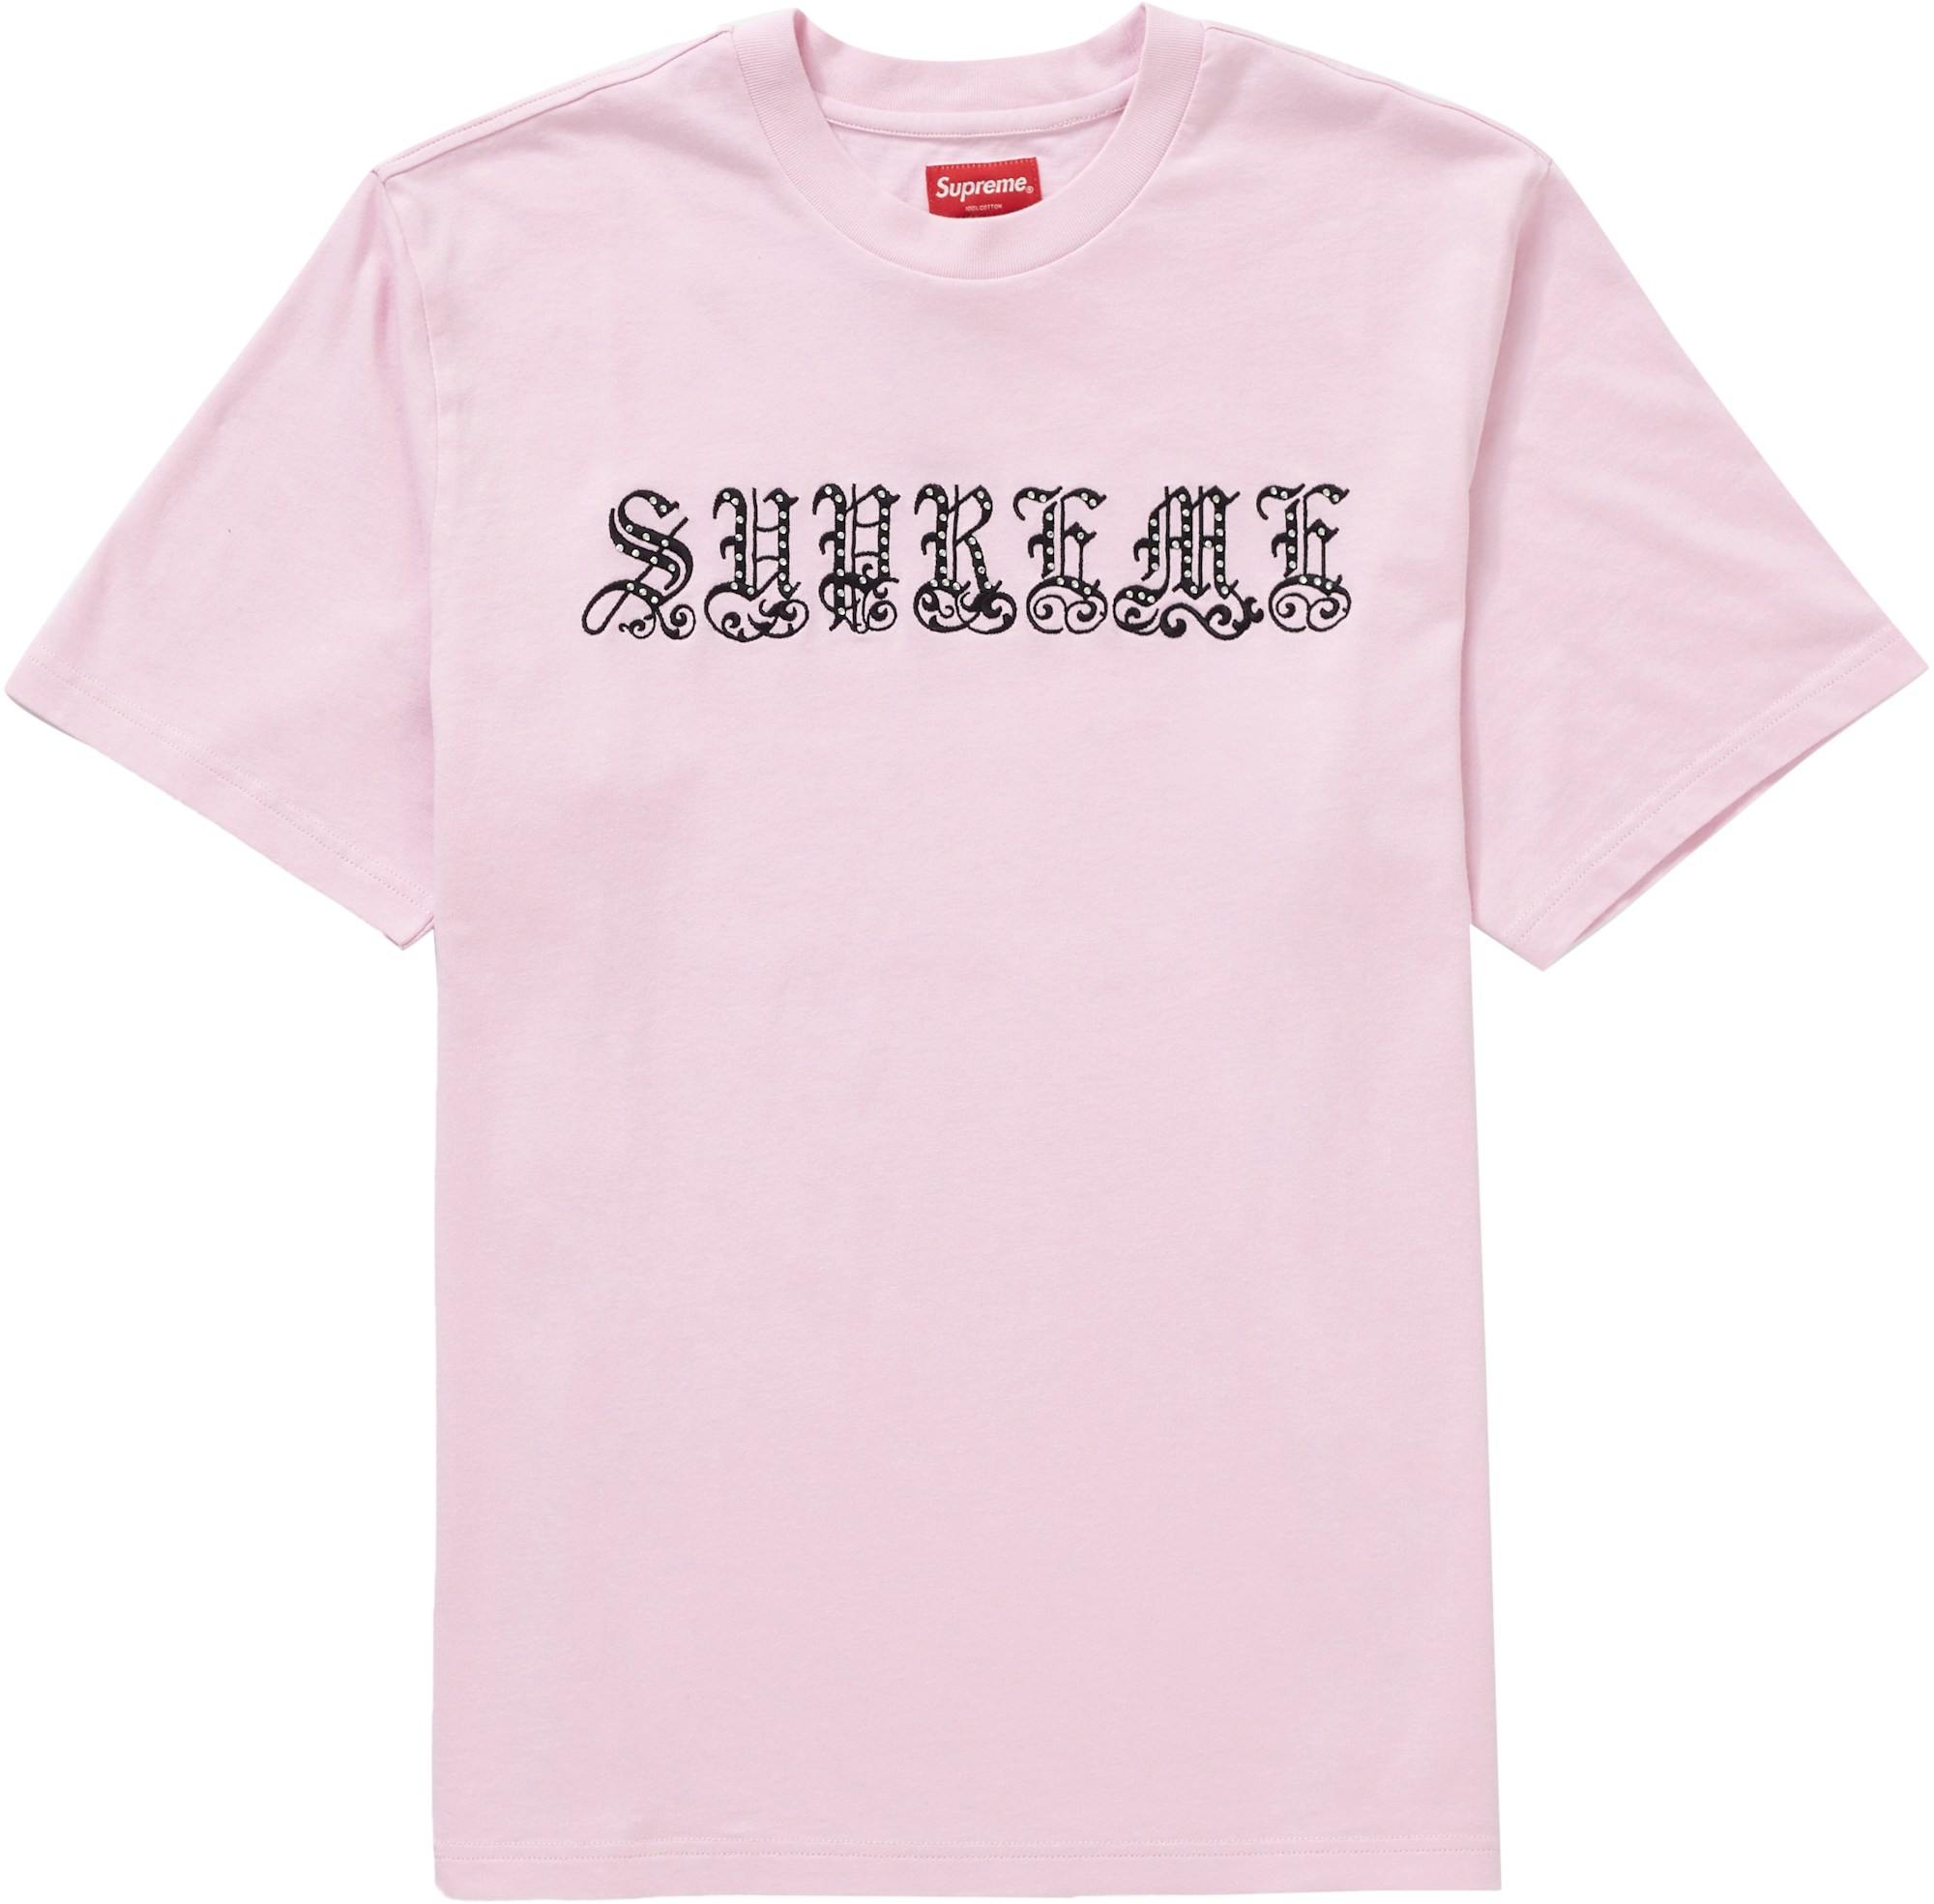 Supreme Old English Rhinestone S/S Top Light Pink - SS21